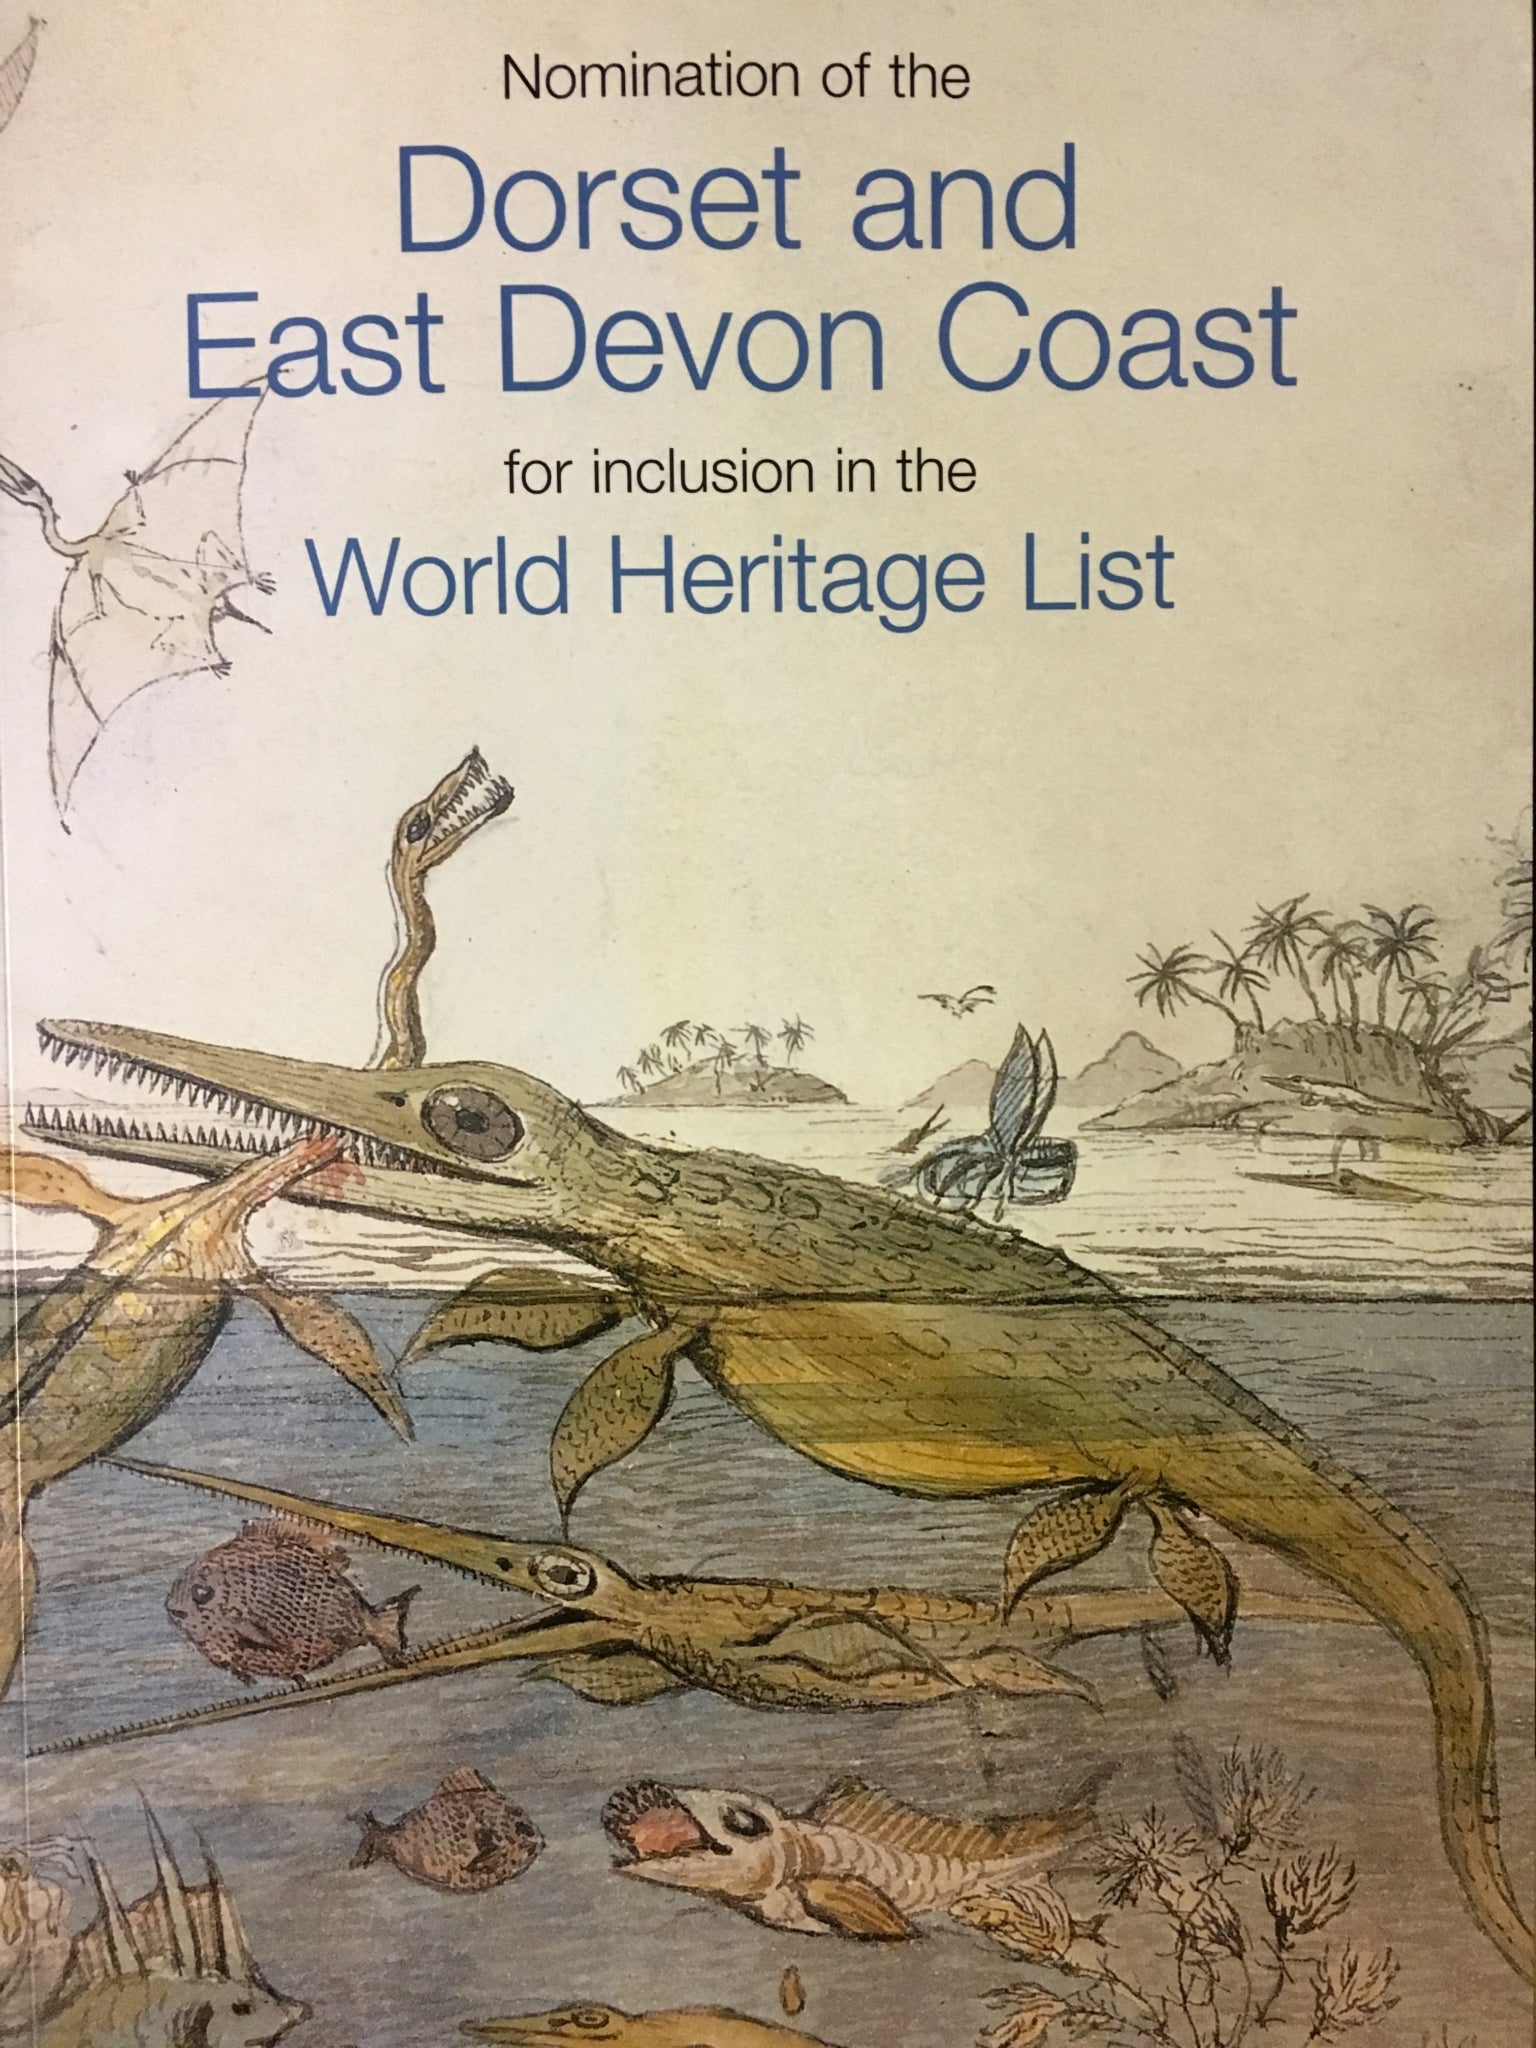 Dorset and East Devon coast world heritage list